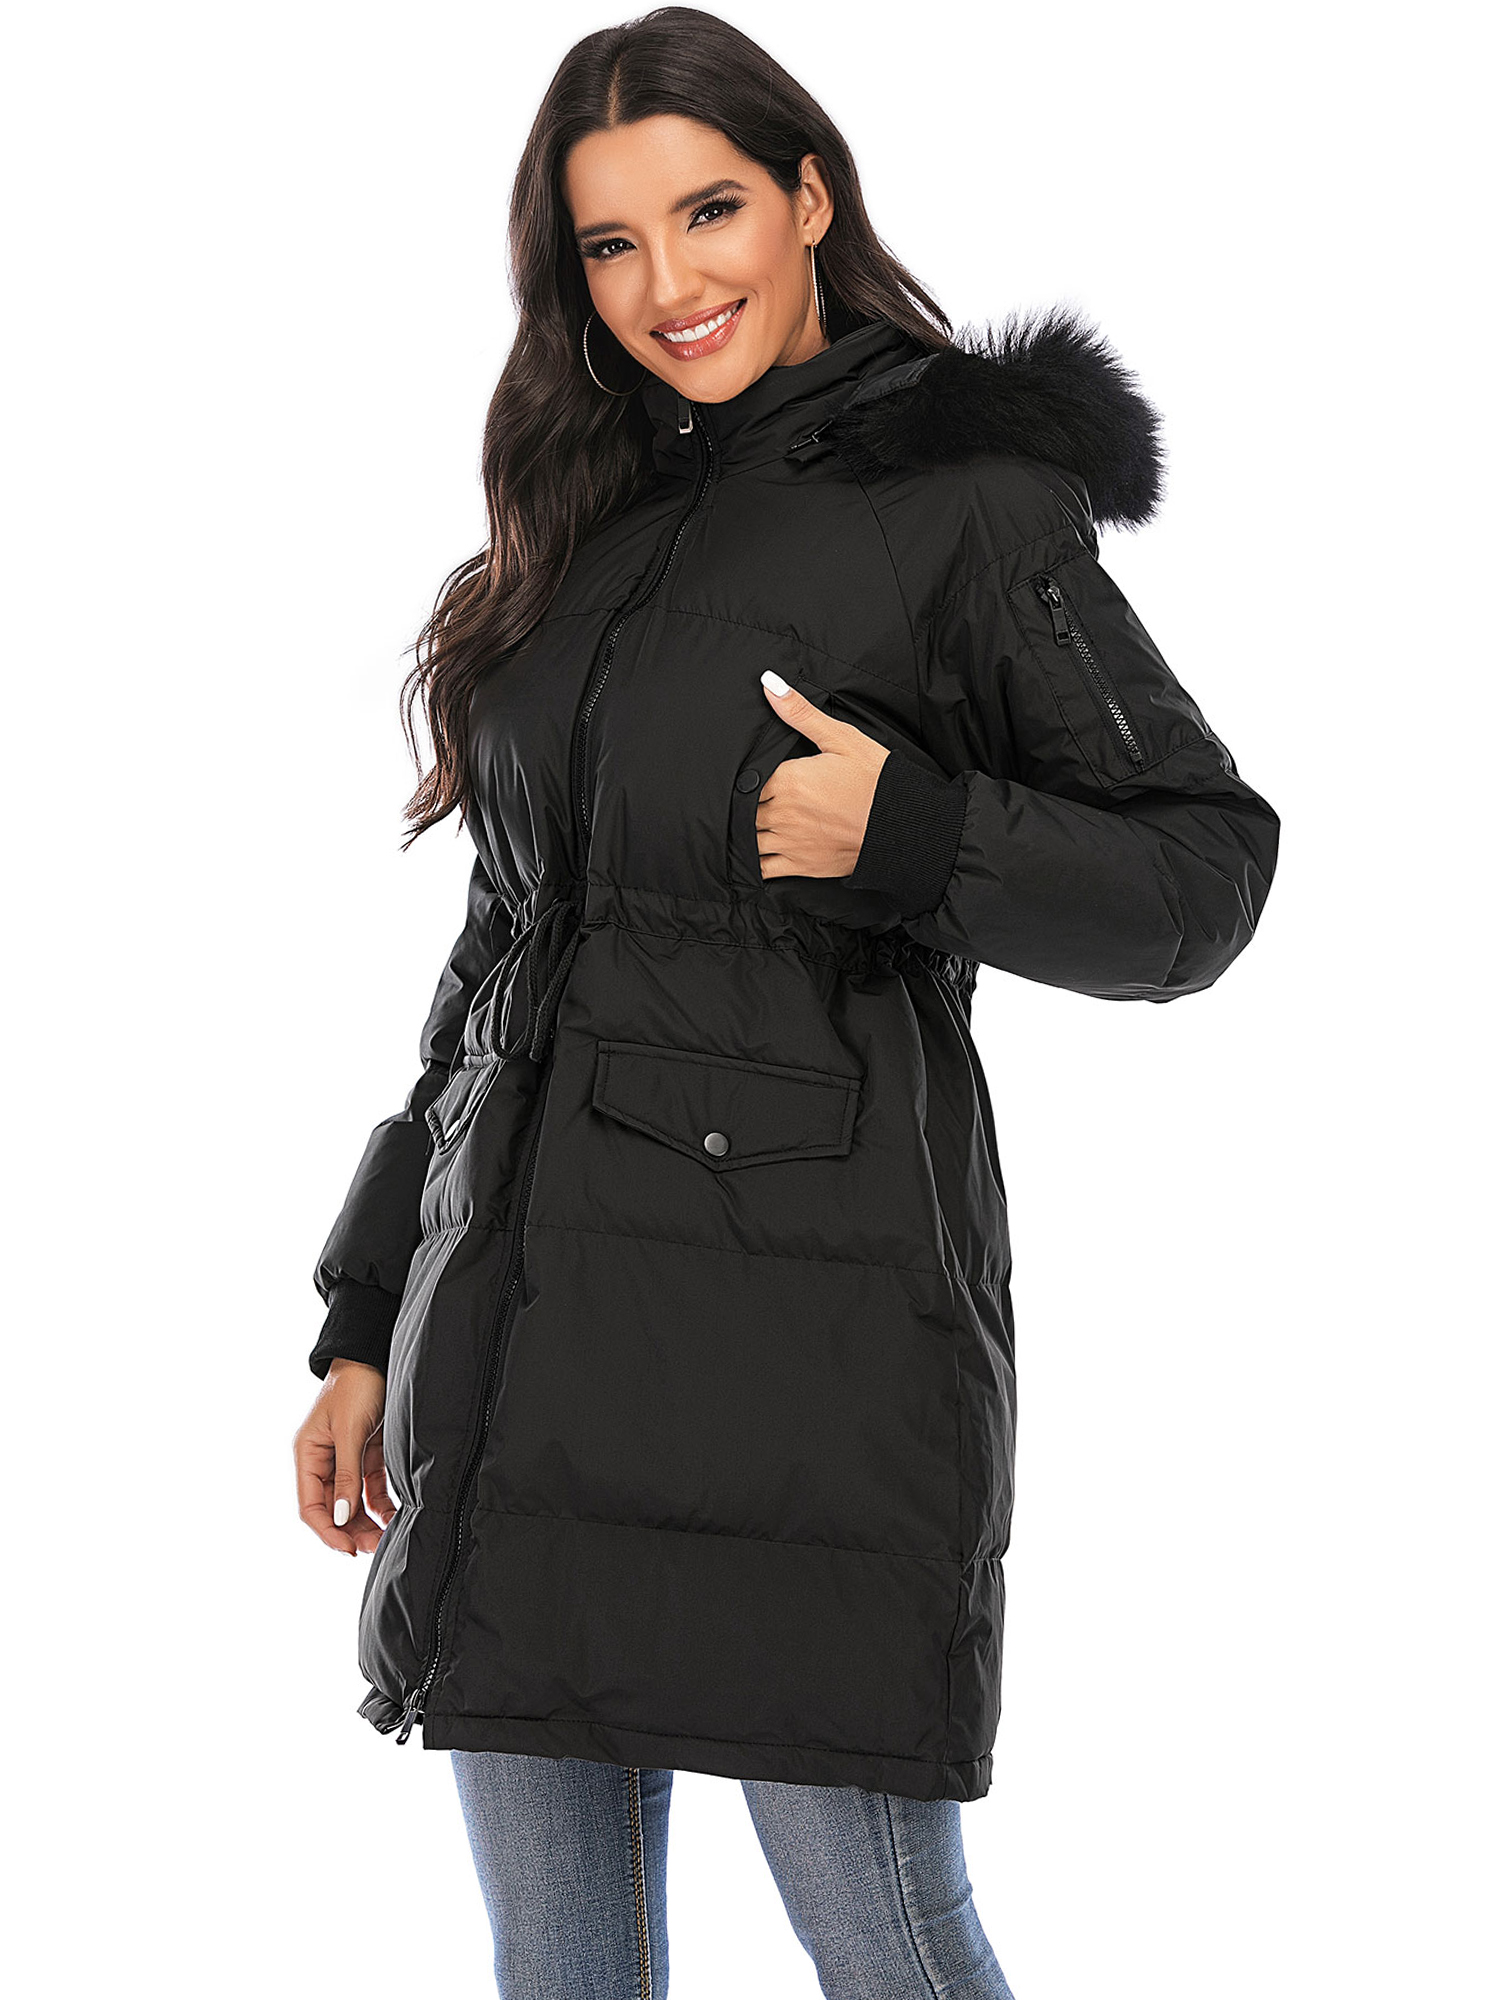 LELINTA Women's Plus Size Winter Warm Zipper Hoodie Long Jacket Waterproof Jacket Hooded Lightweight Raincoat Active Outdoor Trench Coat - image 4 of 7